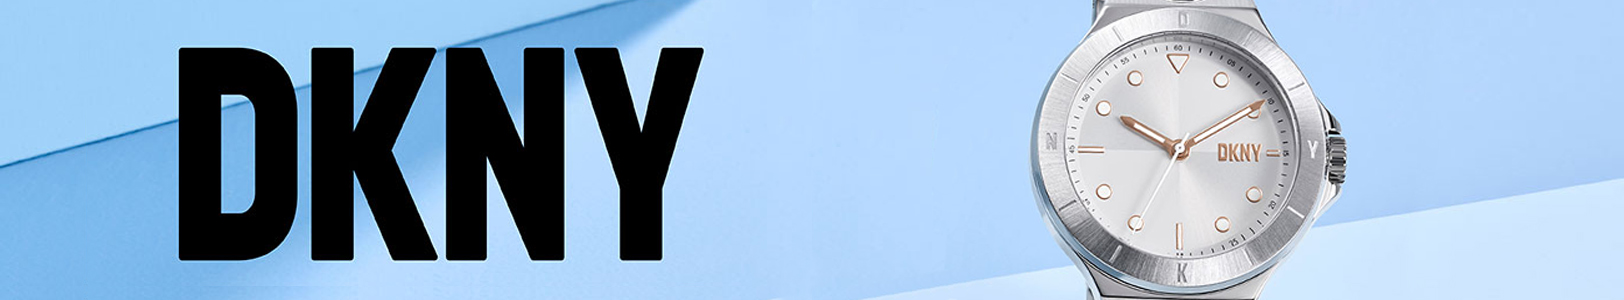 DKNY.1624x300.e.jpg